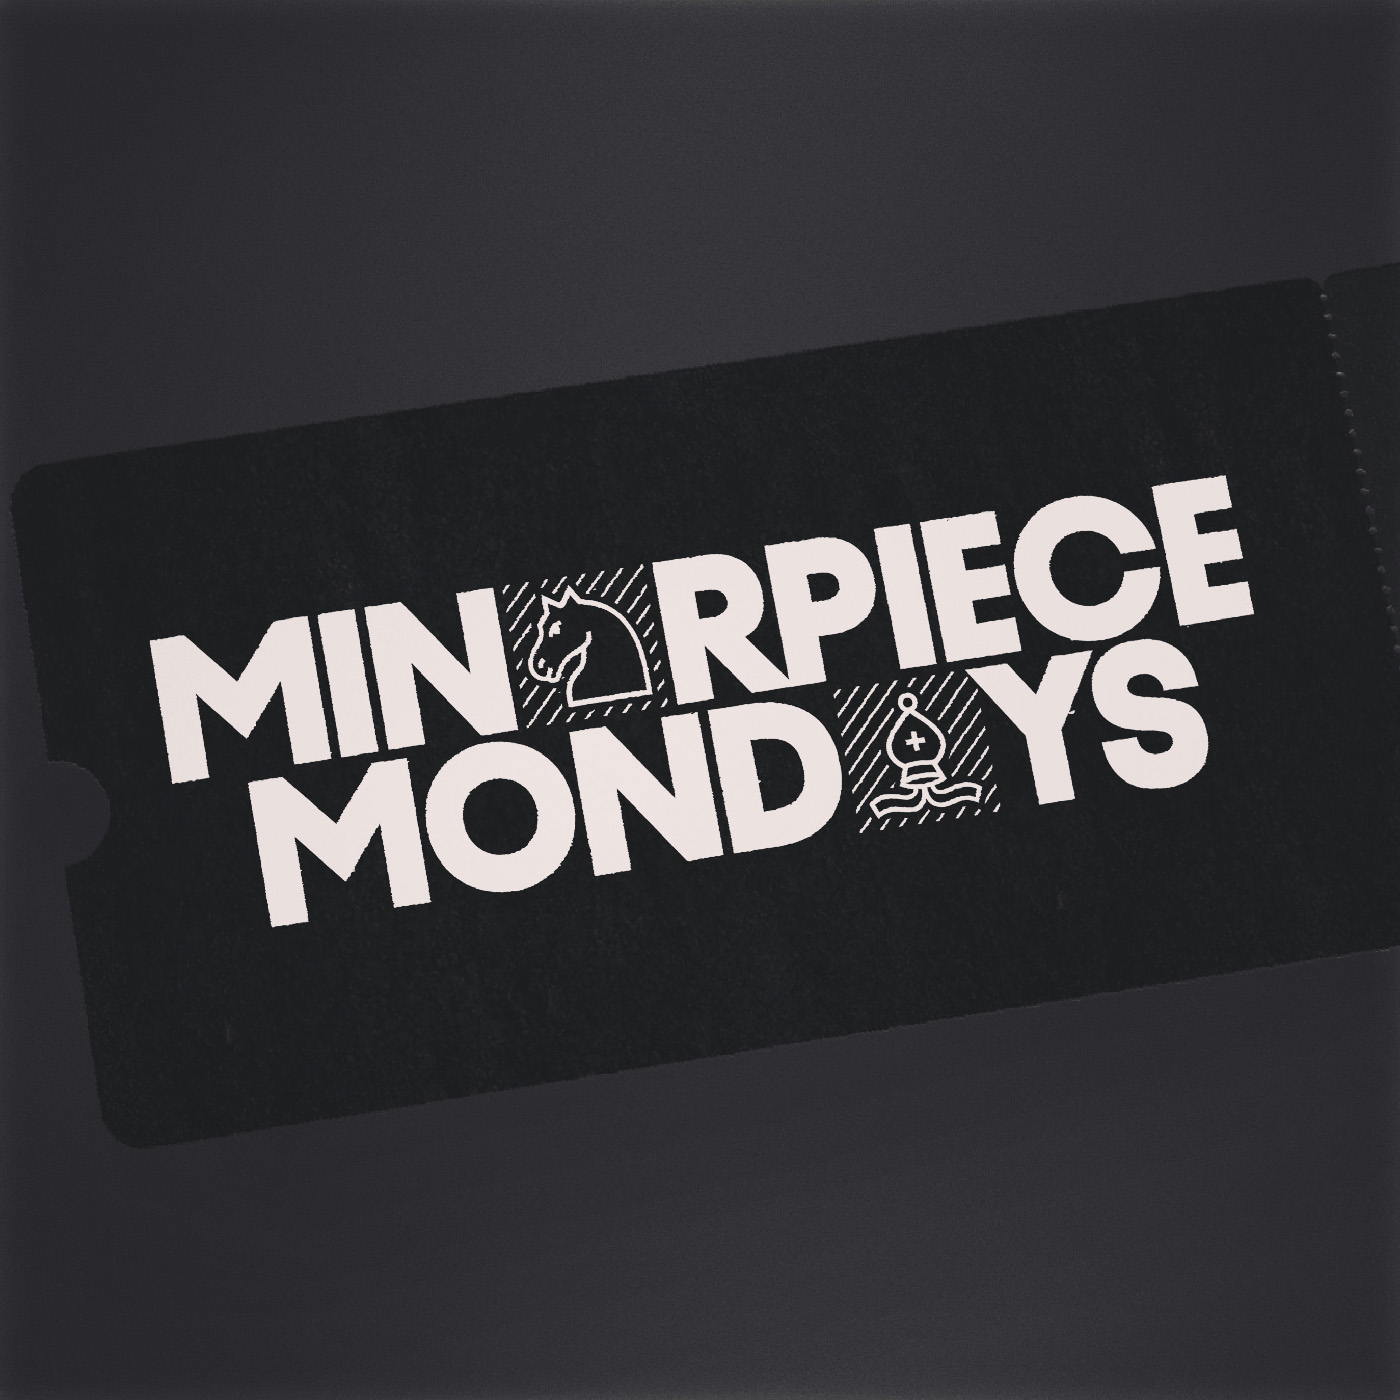 Minor Piece Mondays